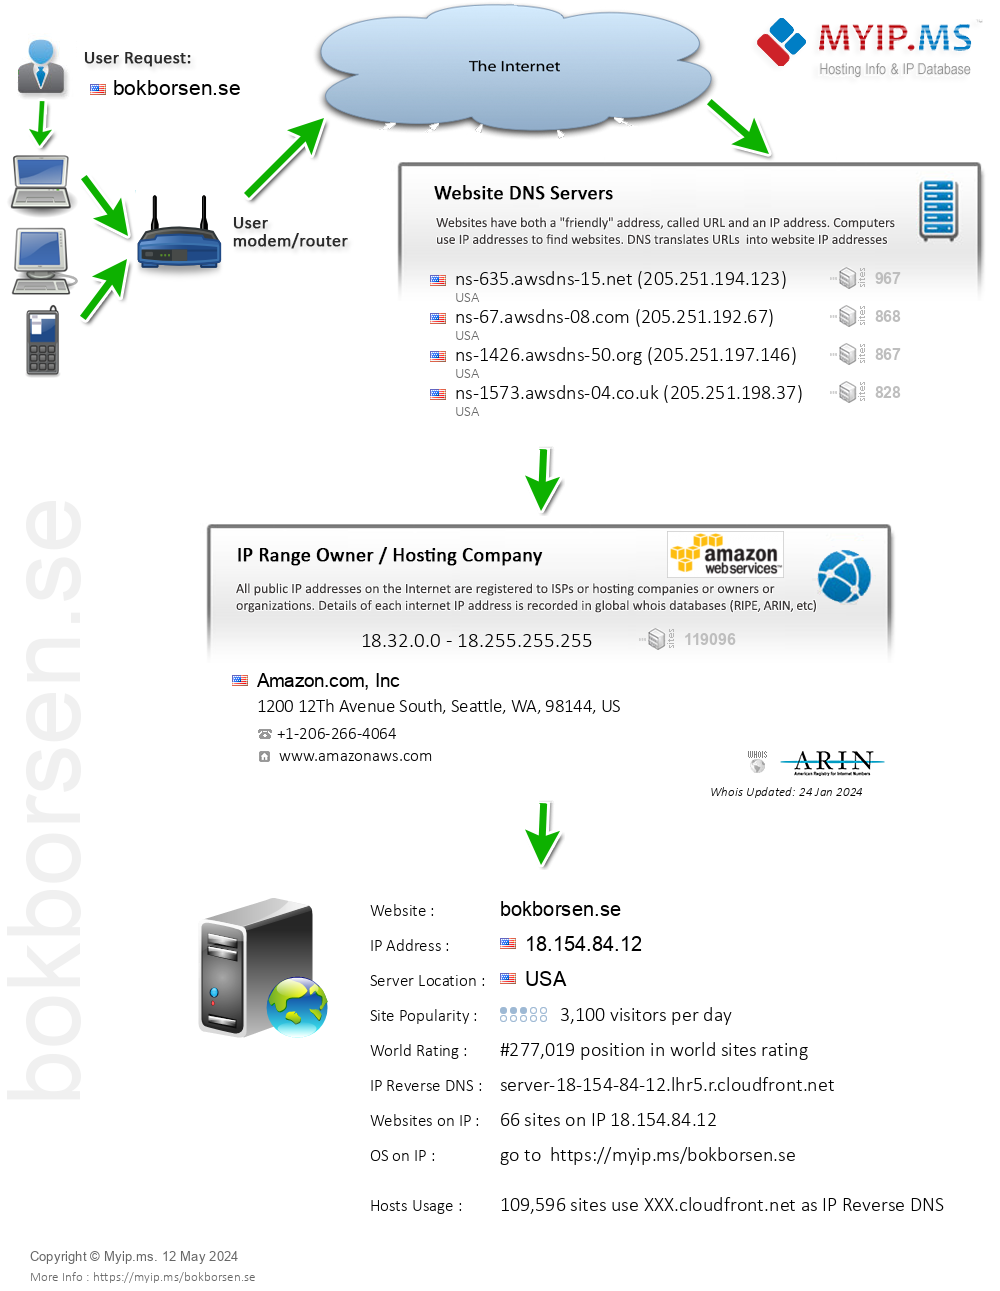 Bokborsen.se - Website Hosting Visual IP Diagram